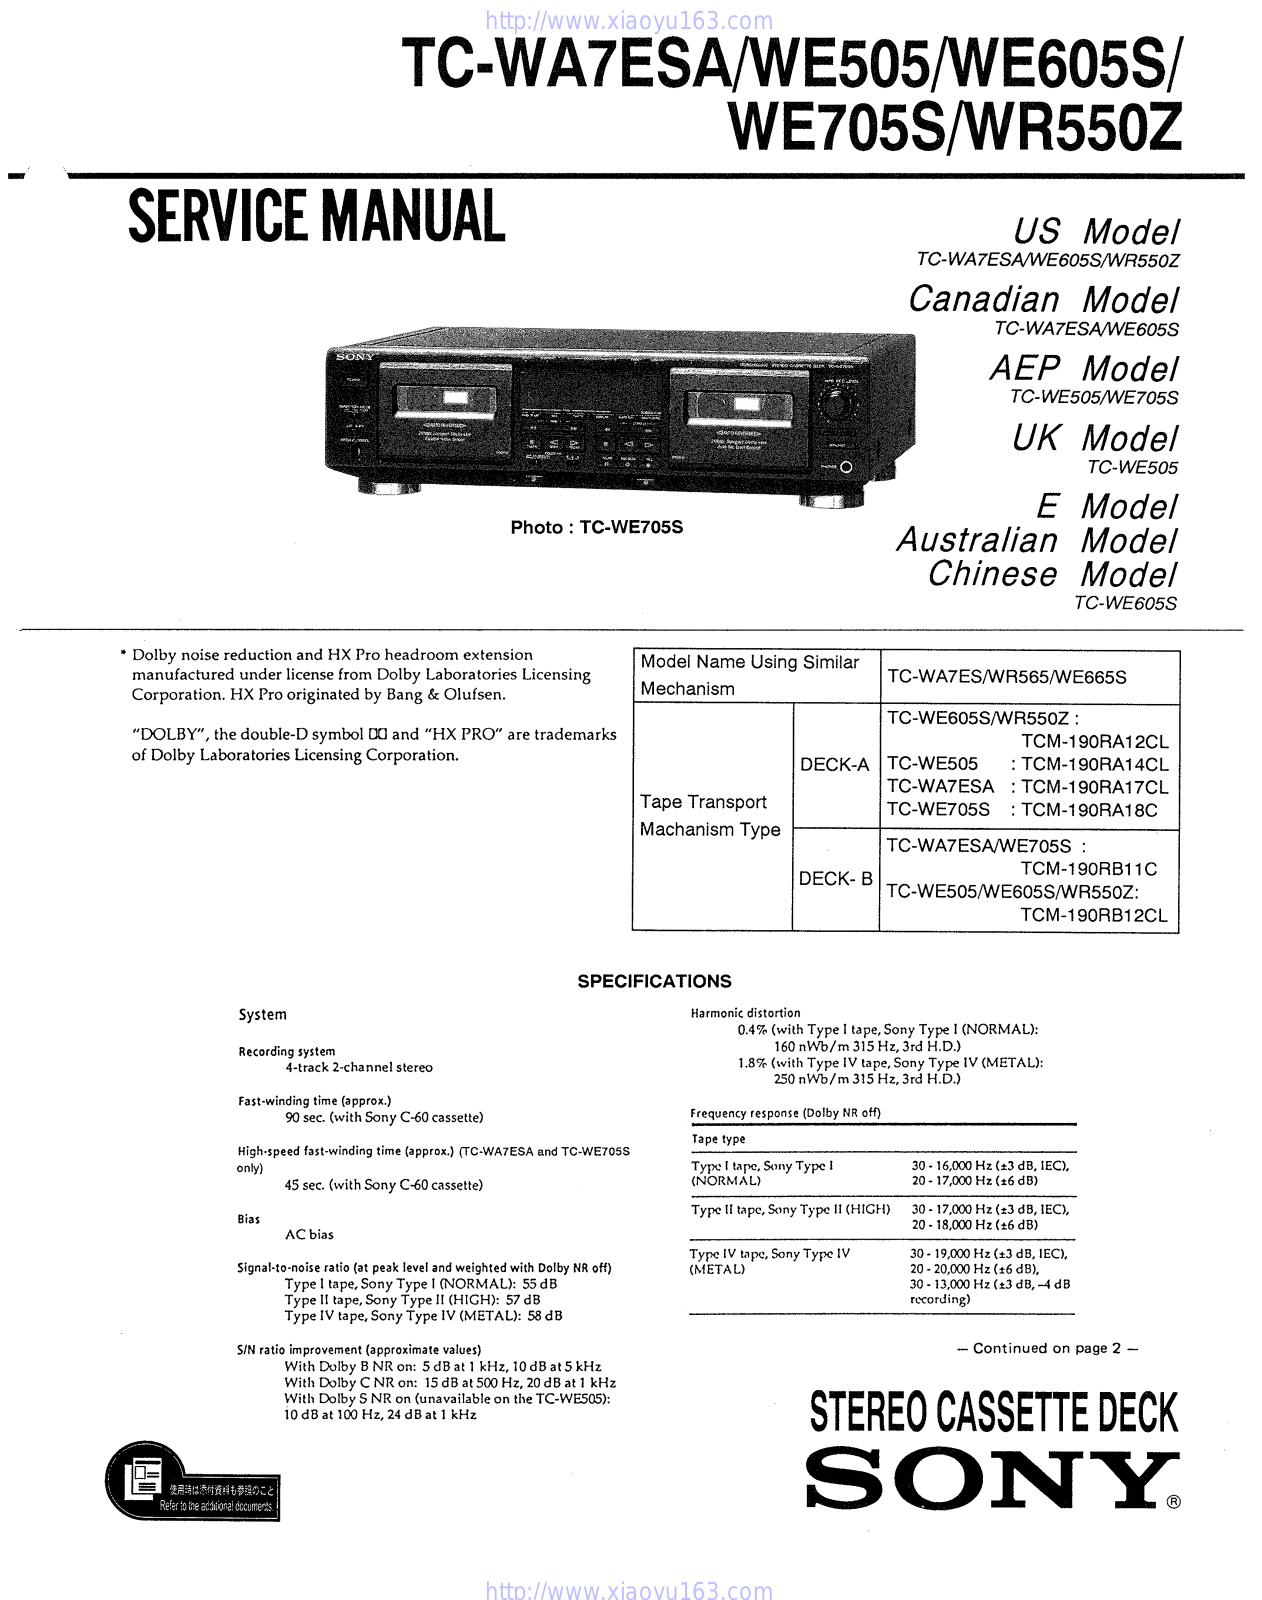 Sony TC-805S, TC-705S, TC-WR550Z, TC-WE505-2 User Manual